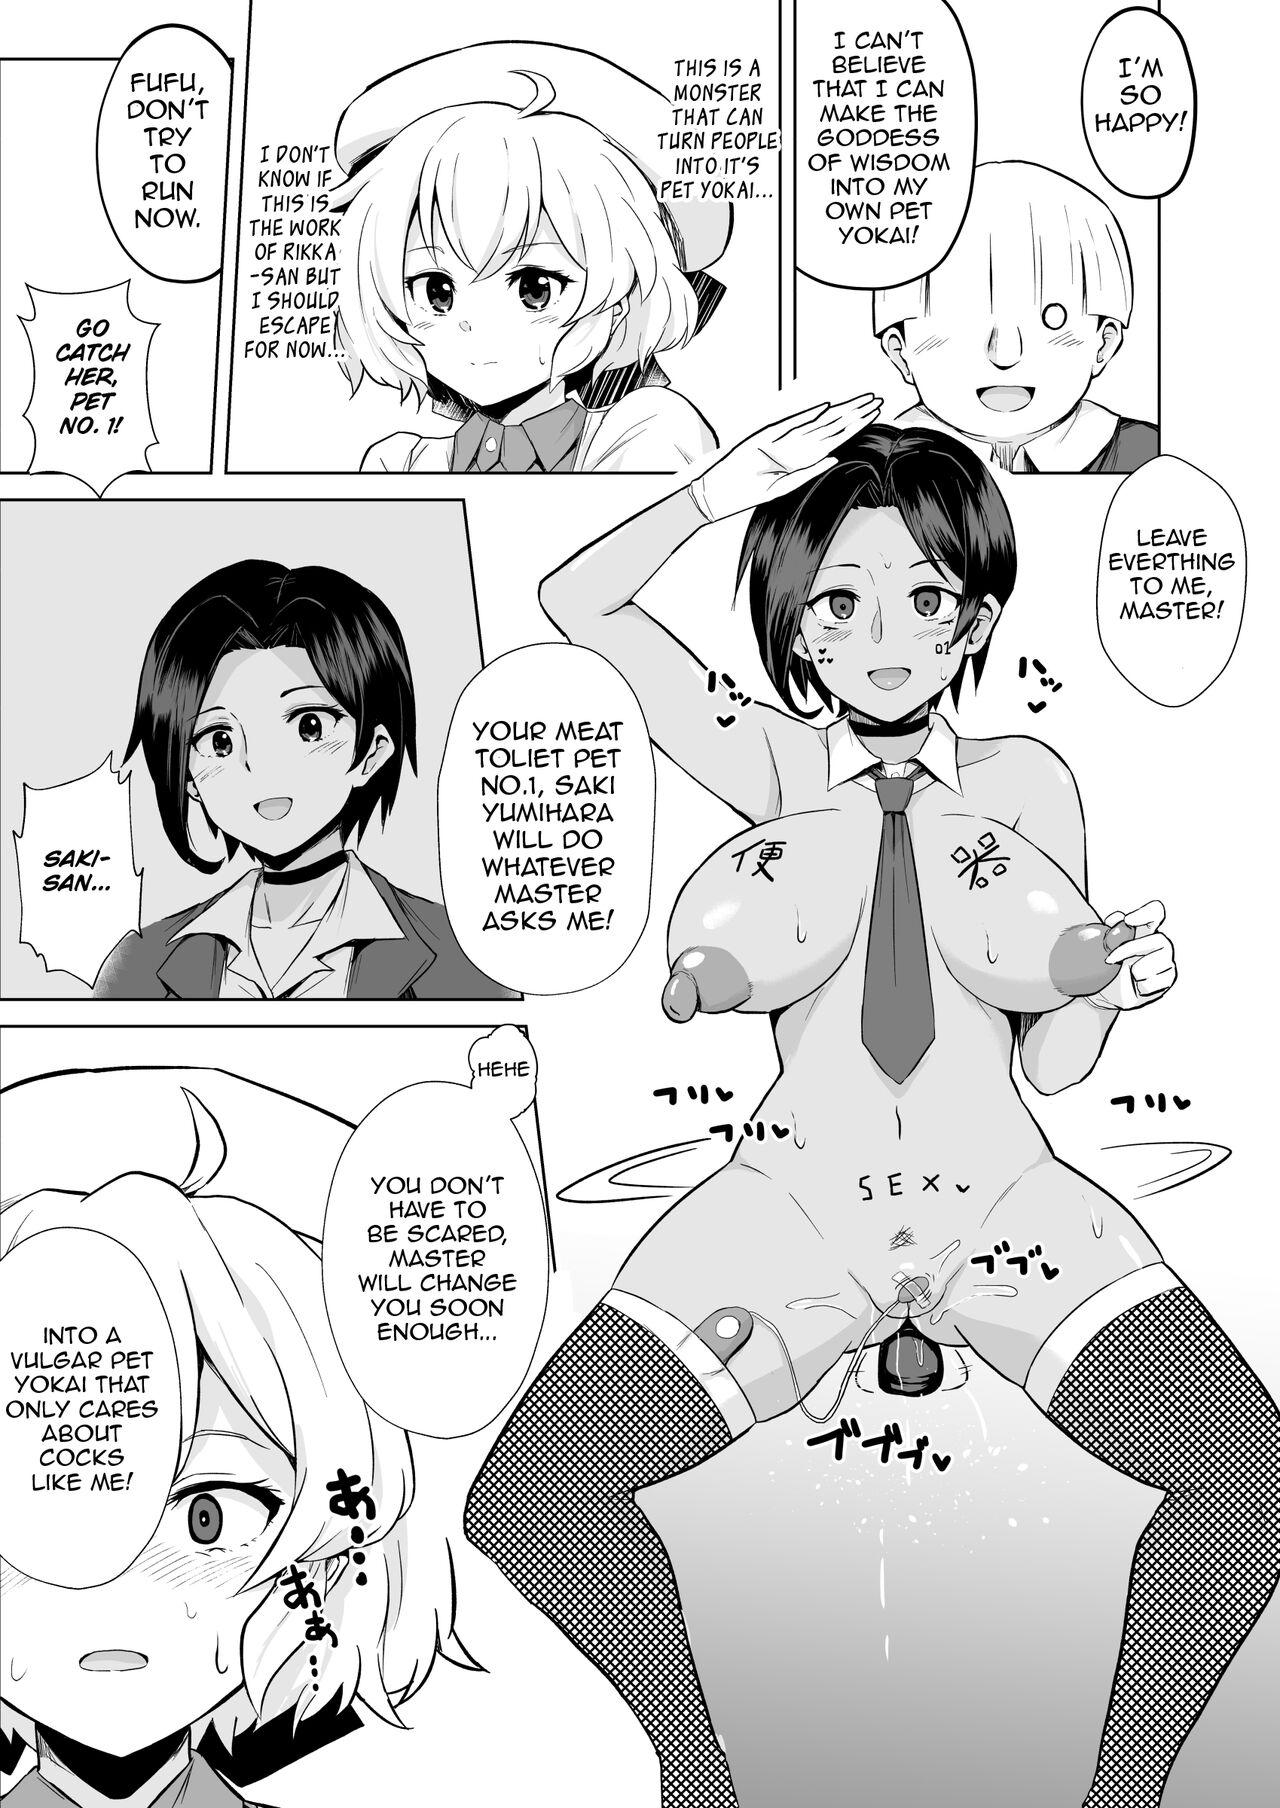 [Sanatuki] Kyokou Suiri 2-page Manga | In/Spectre 2-Page Manga (Kyokou Suiri) [English] 1